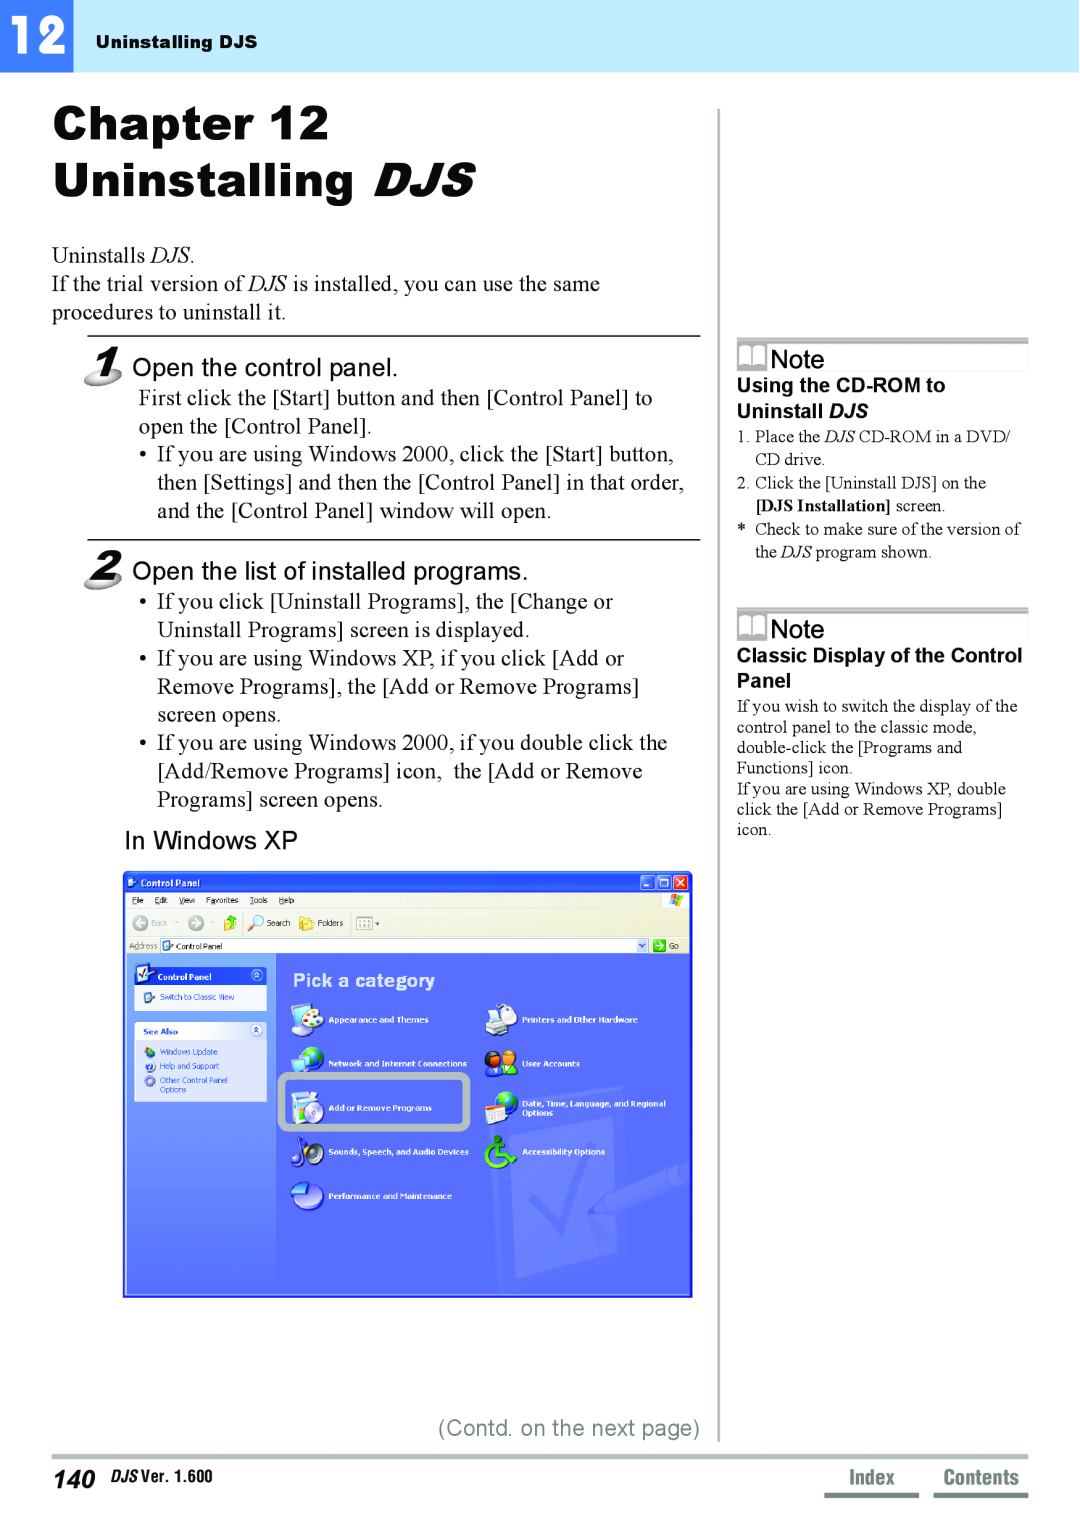 Pioneer SVJ-DL01 Chapter Uninstalling DJS, Open the control panel, Open the list of installed programs, In Windows XP 